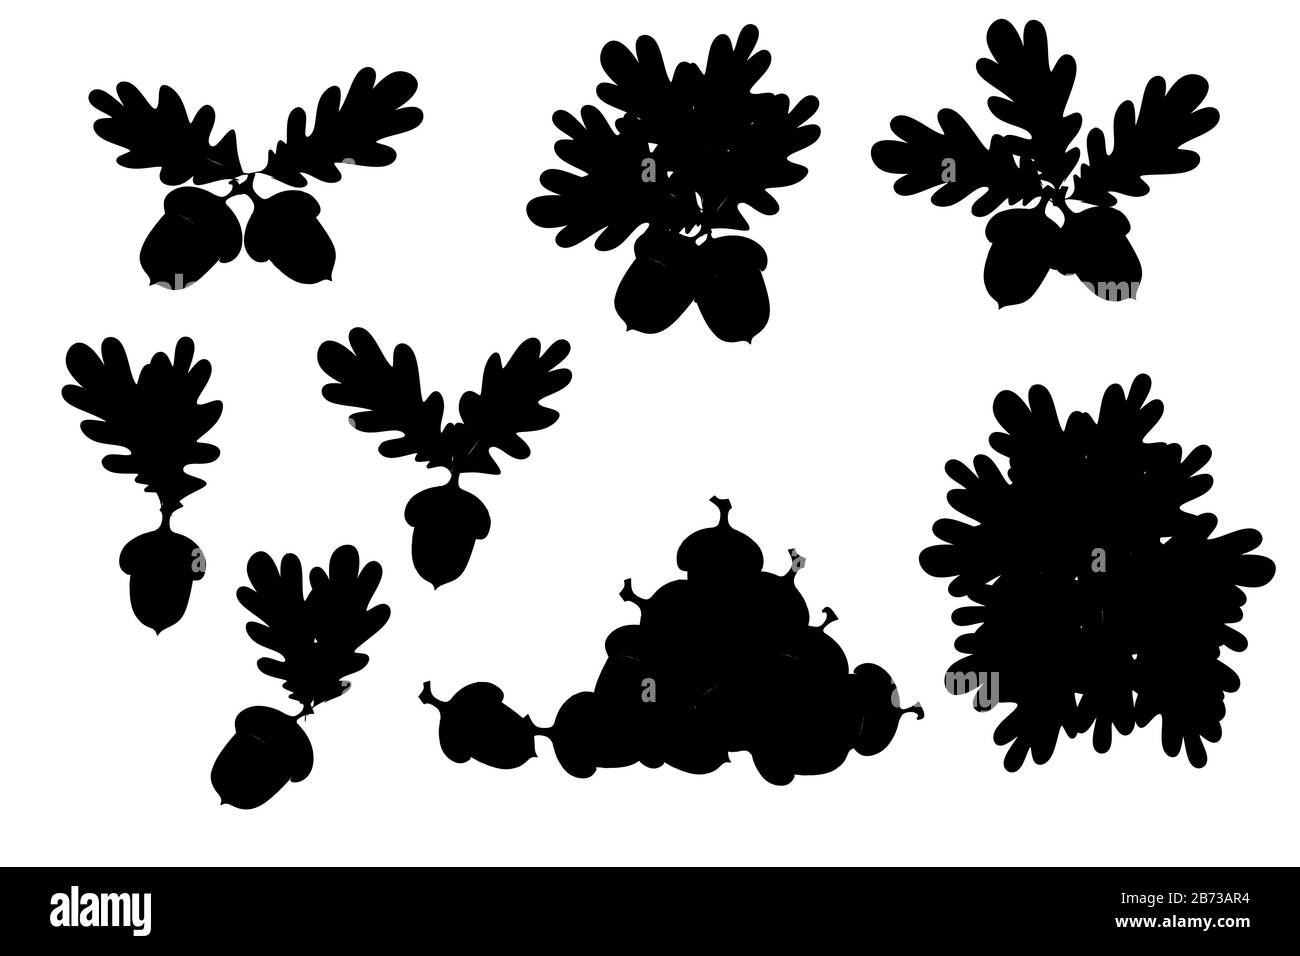 Black silhouette set of oak leaves with acorns flat vector illustration on white background. Stock Vector